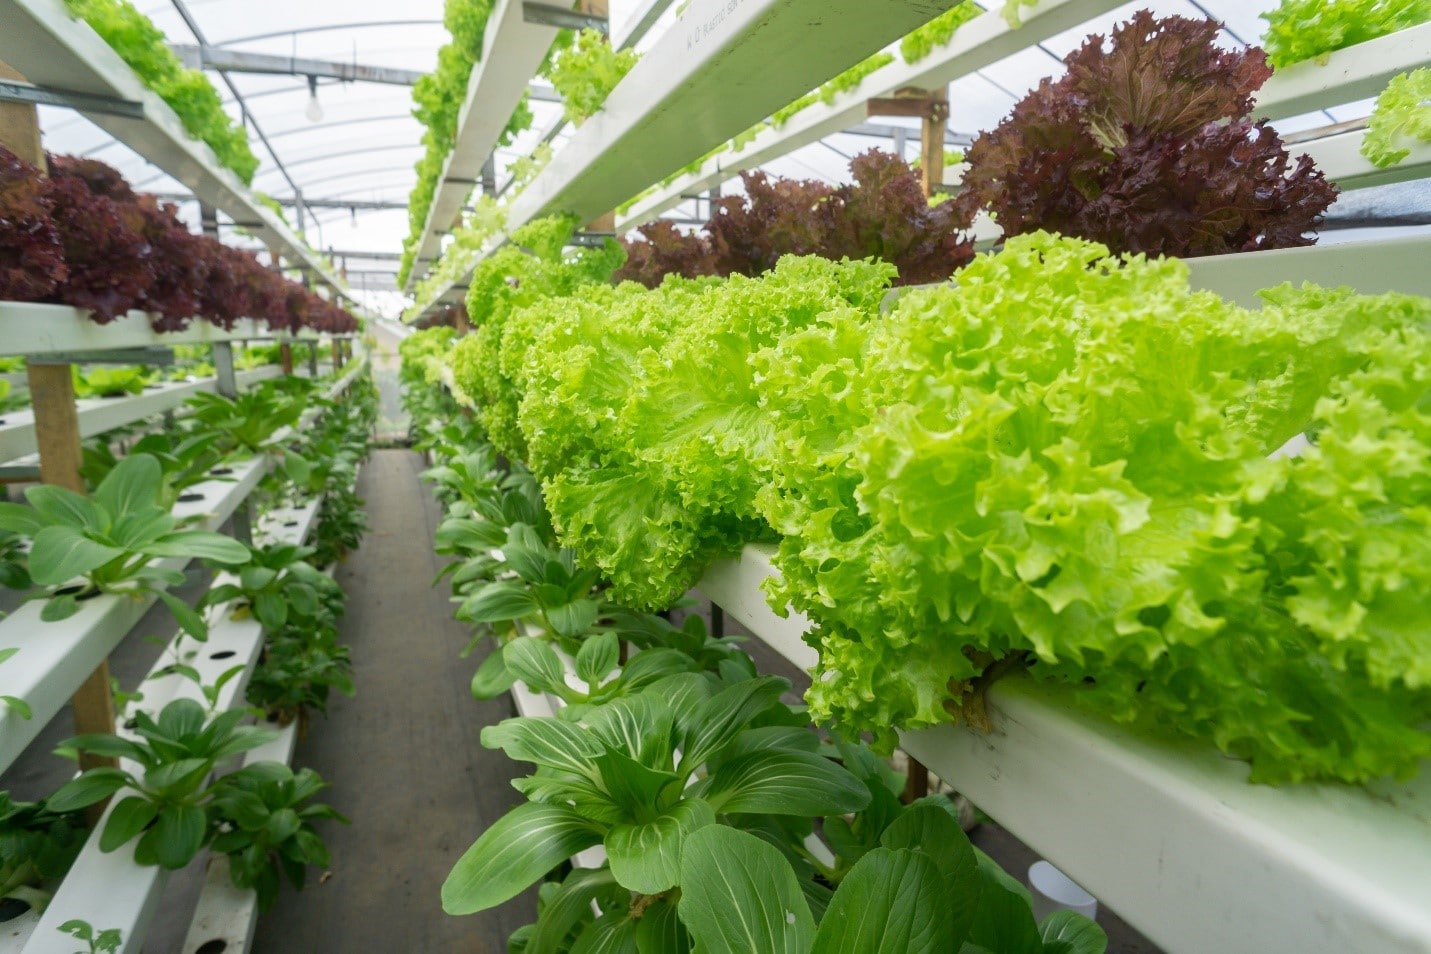 Aquaponics Lettuce Production - How do you Grow Lettuce in Aquaponics?